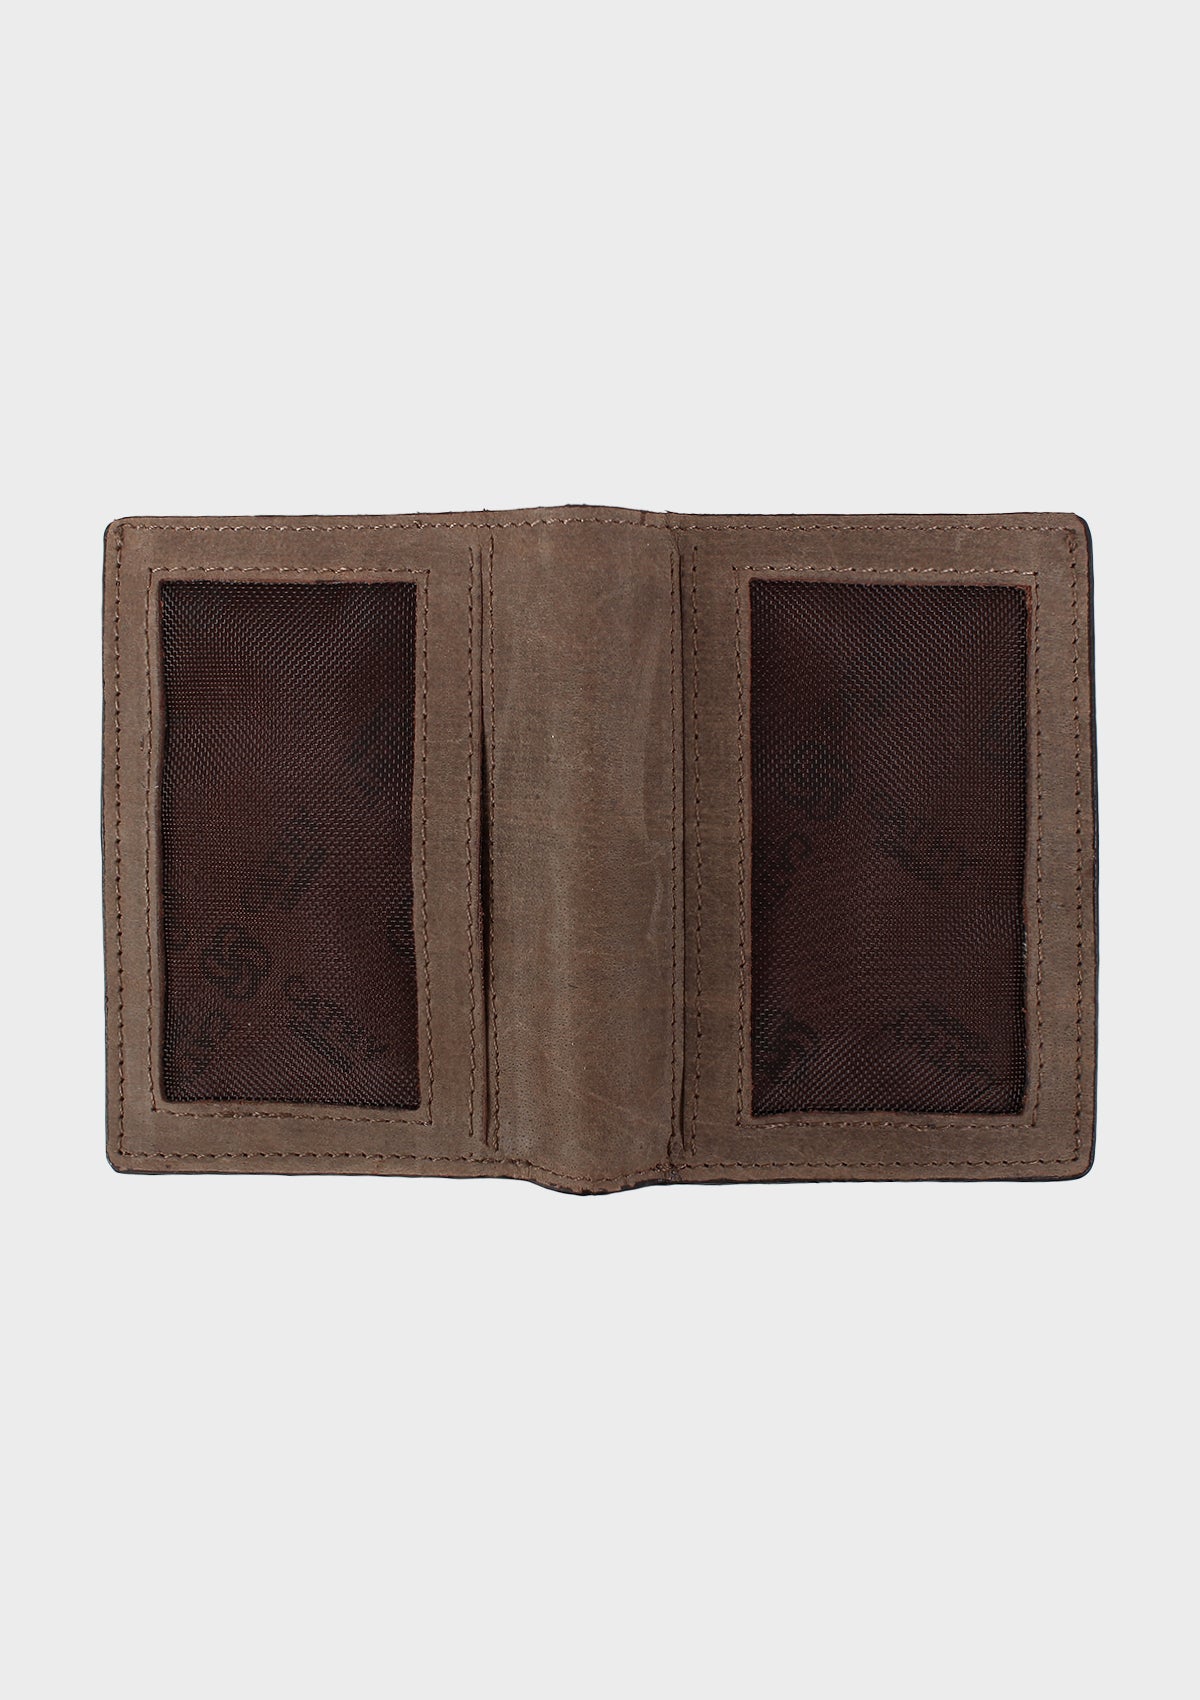 Brown Colour Bi-Fold Italian Leather Card Holder/Slim Wallet (6 Card Slot + 2 ID Slot + Cash Compartment)